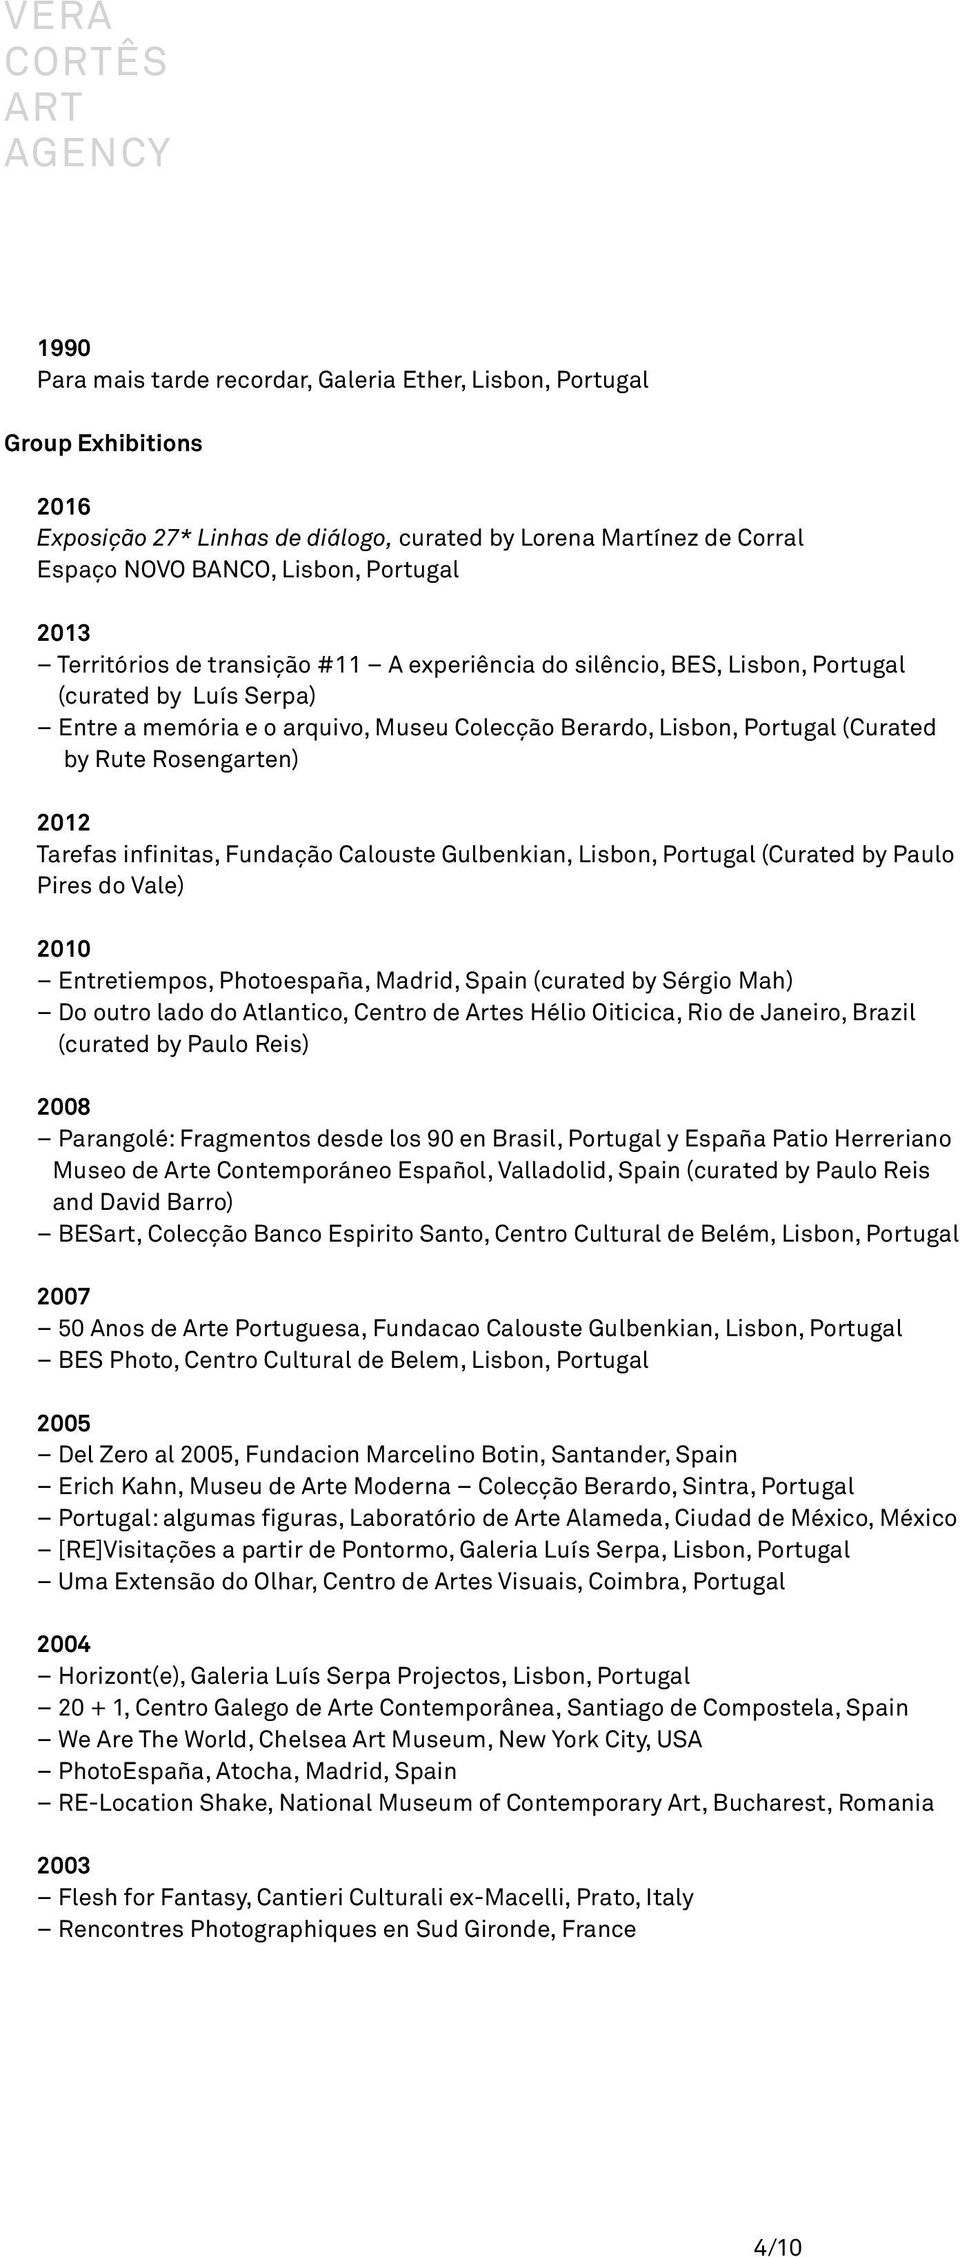 Rosengarten) 2012 Tarefas infinitas, Fundação Calouste Gulbenkian, Lisbon, Portugal (Curated by Paulo Pires do Vale) 2010 Entretiempos, Photoespaña, Madrid, Spain (curated by Sérgio Mah) Do outro